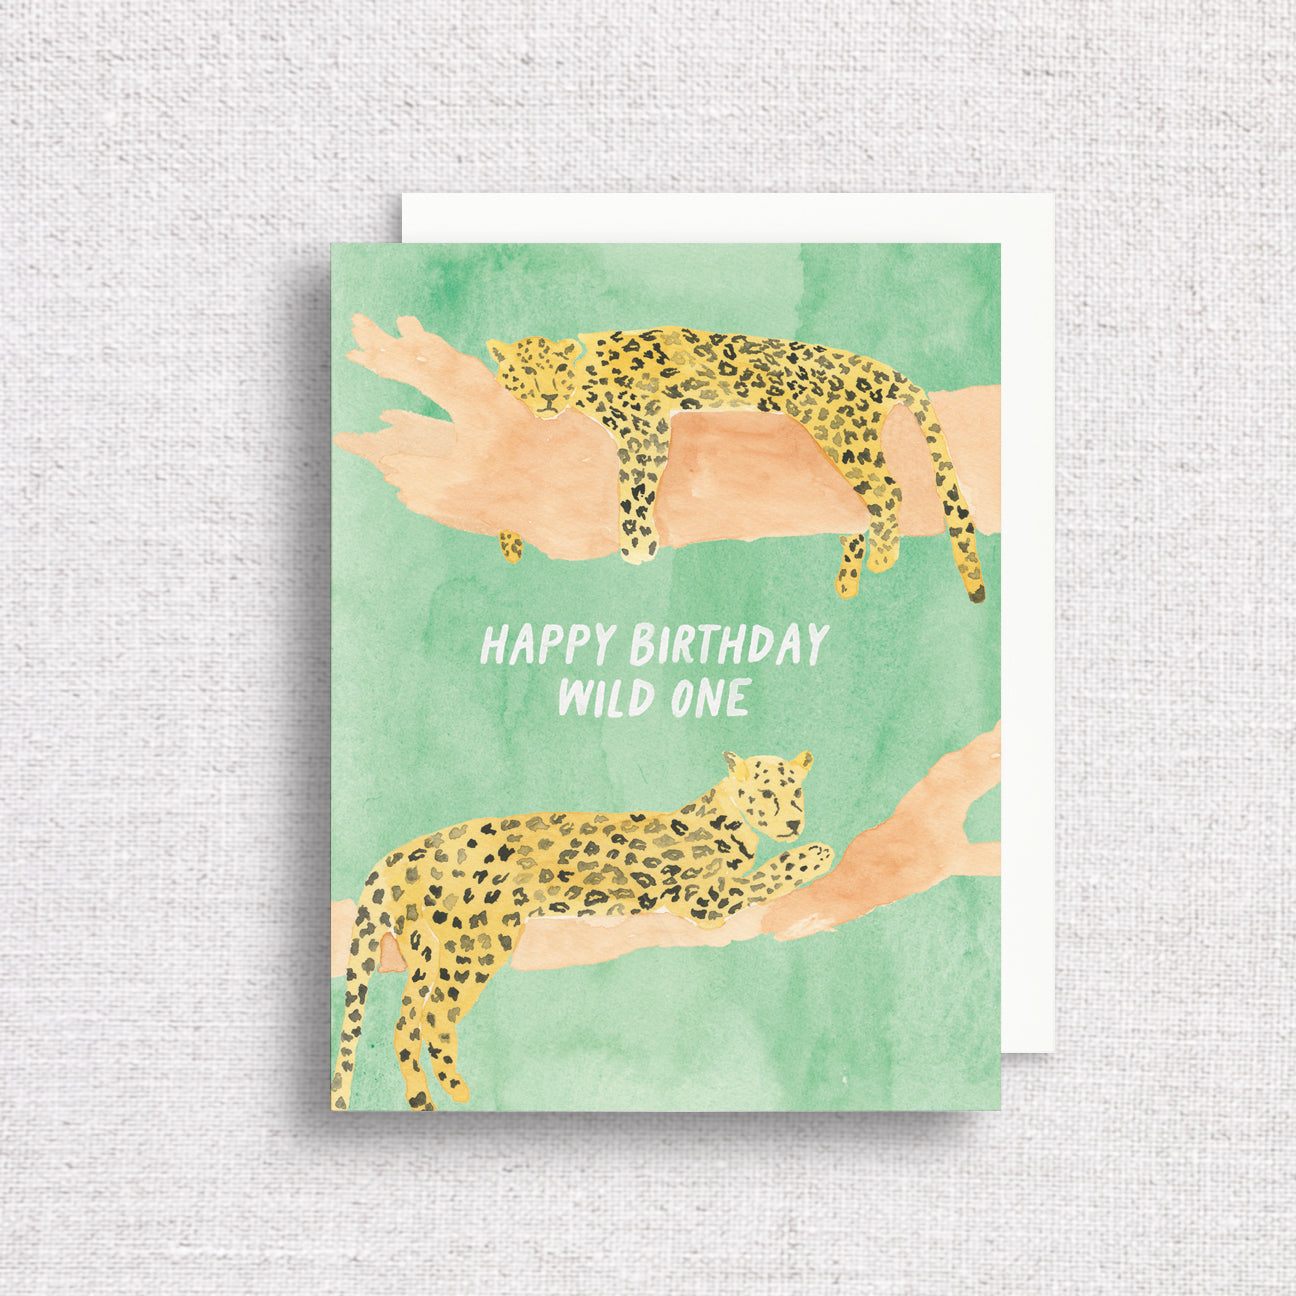 The Story Behind my "Happy Birthday Wild One" Birthday Card